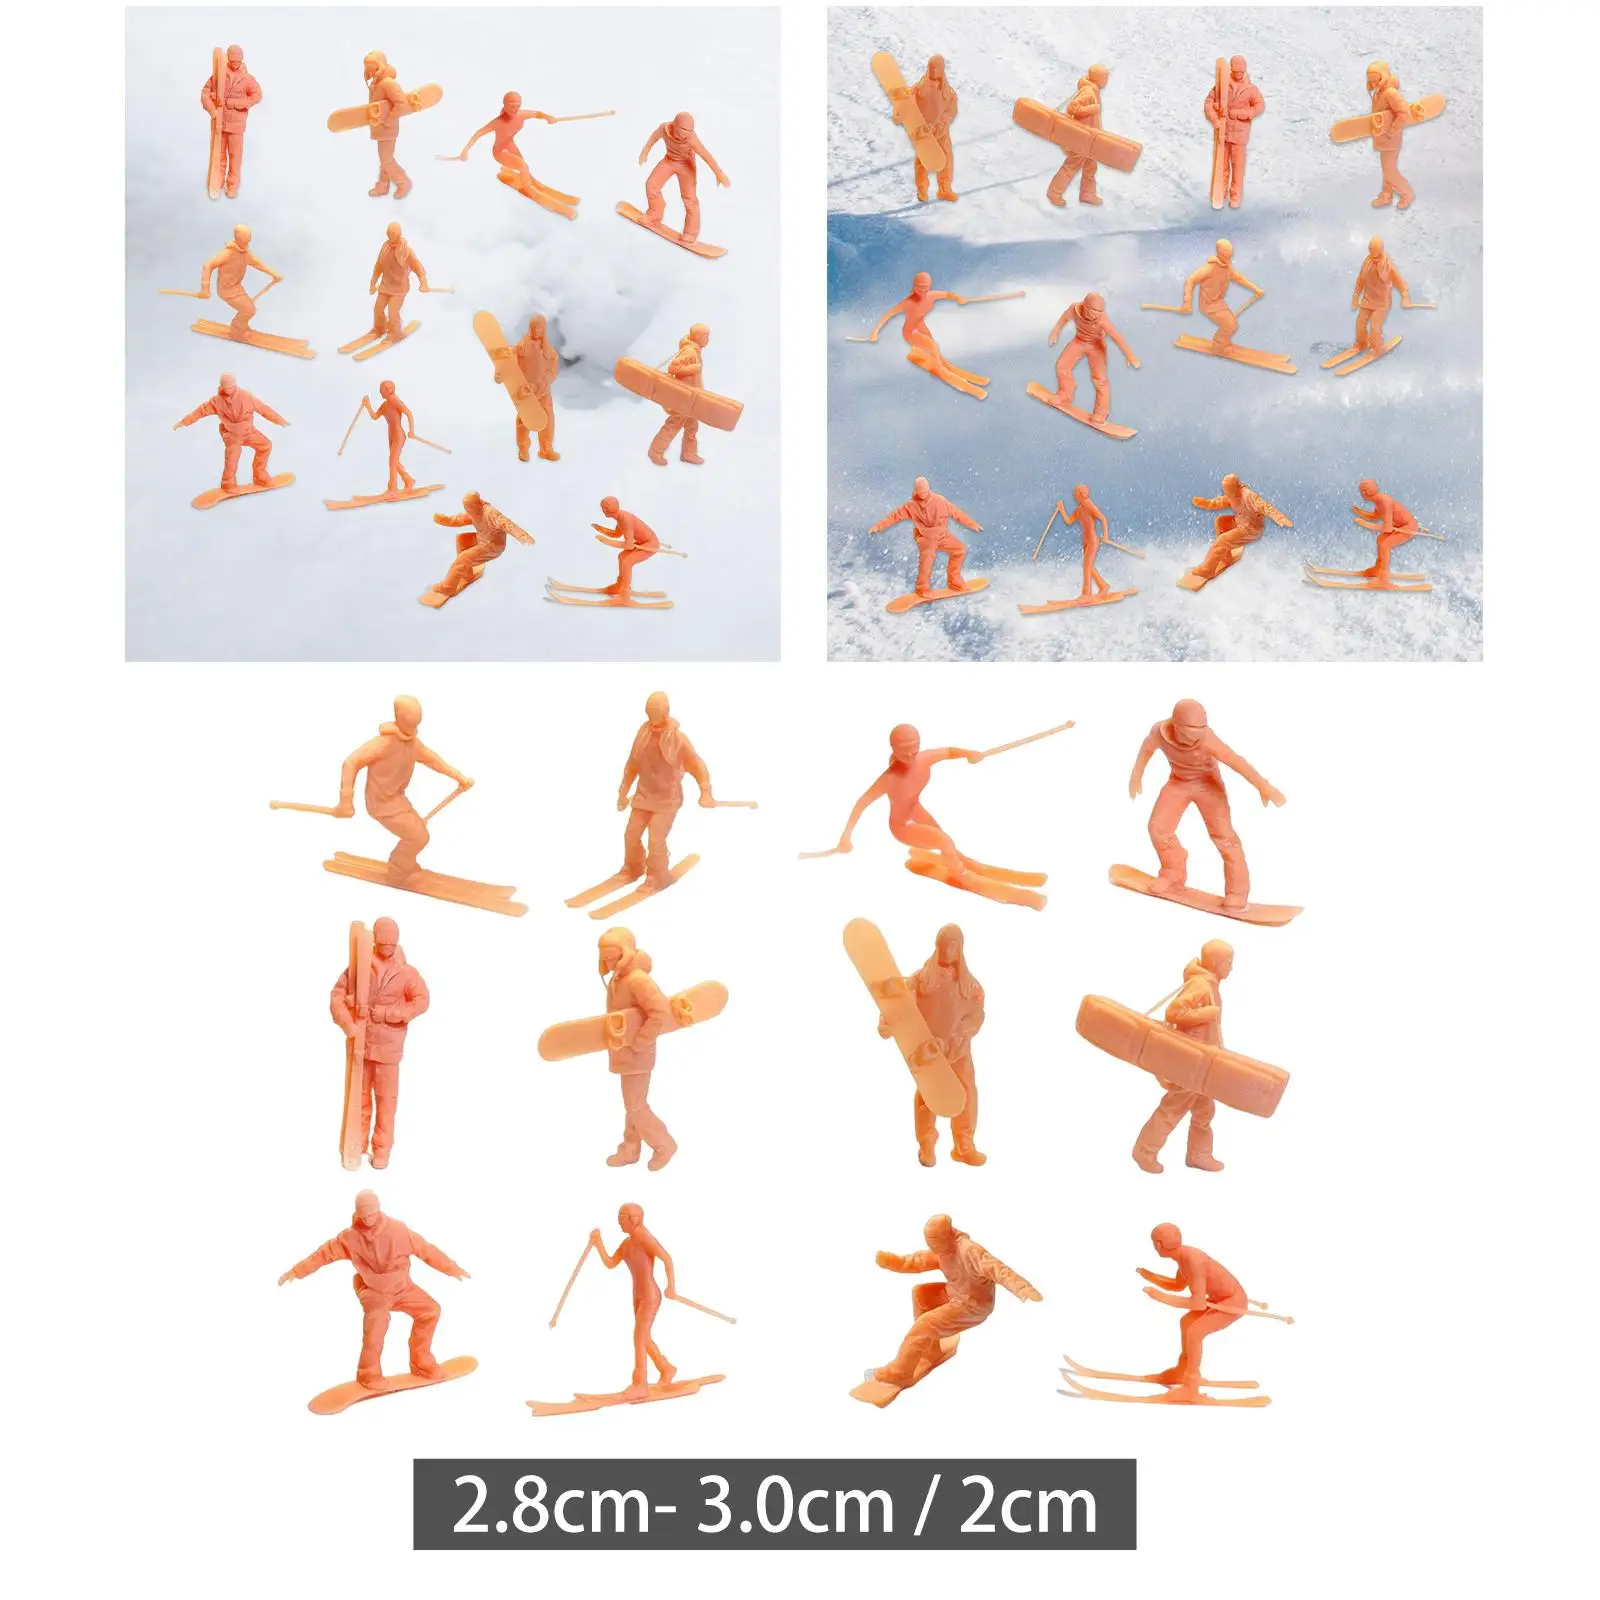 Mini Skiing Figures Resin Scenery Landscape Layout for DIY Scene Ornament